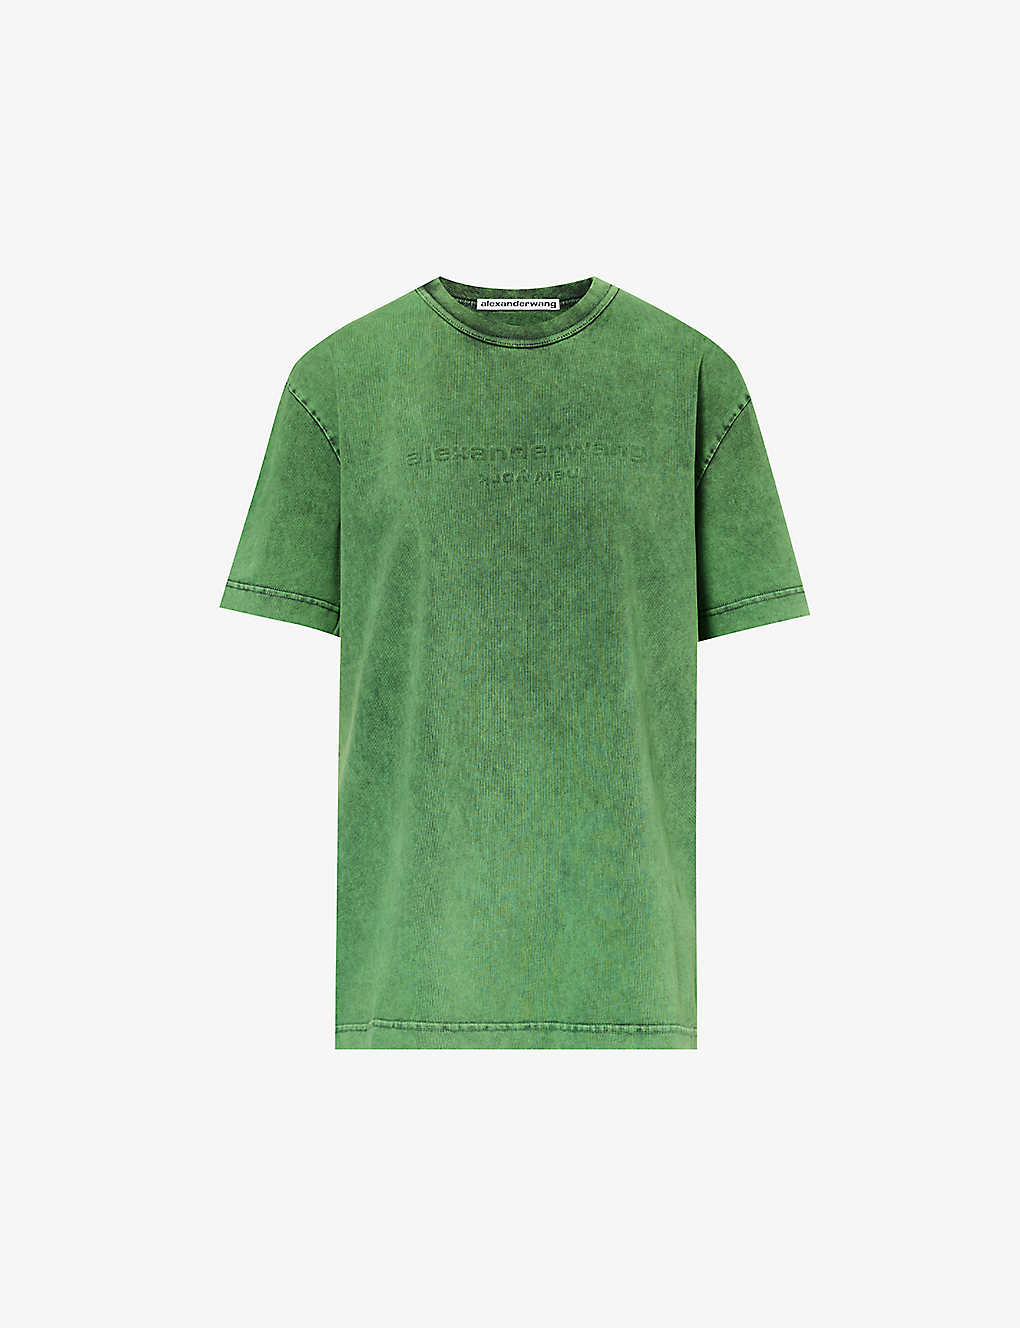 Alexander Wang Womens Acid Fern Faded-wash Logo-print Cotton-jersey T-shirt